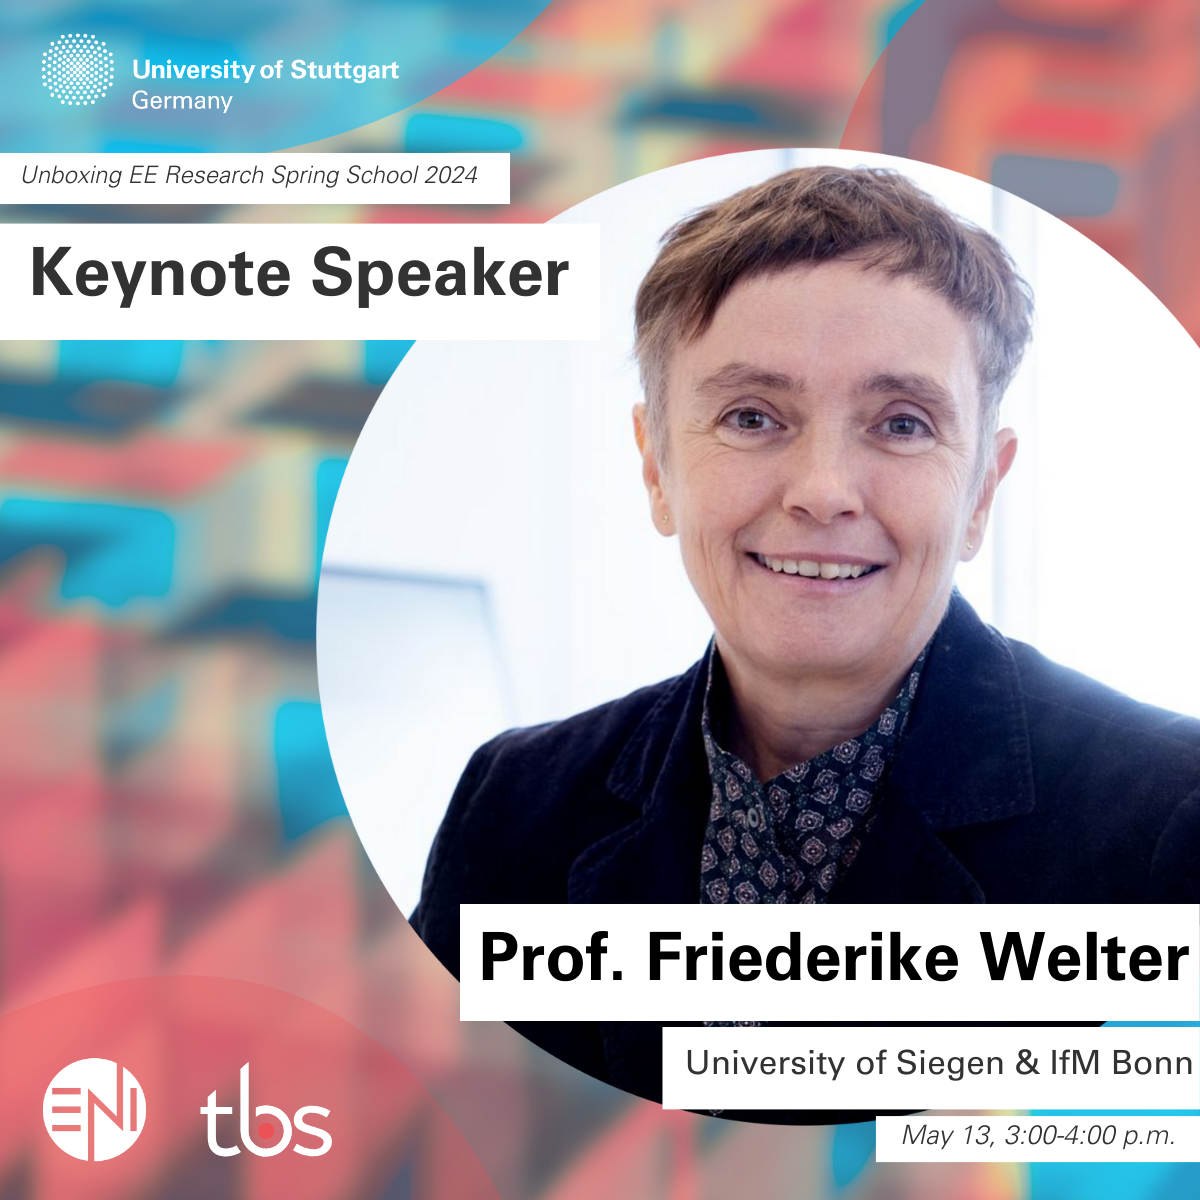 Unboxing #EERSS2024 Pt. 1: We welcome our Keynote Speaker, Prof. Friederike Welter (University of Siegen & IfM Bonn).